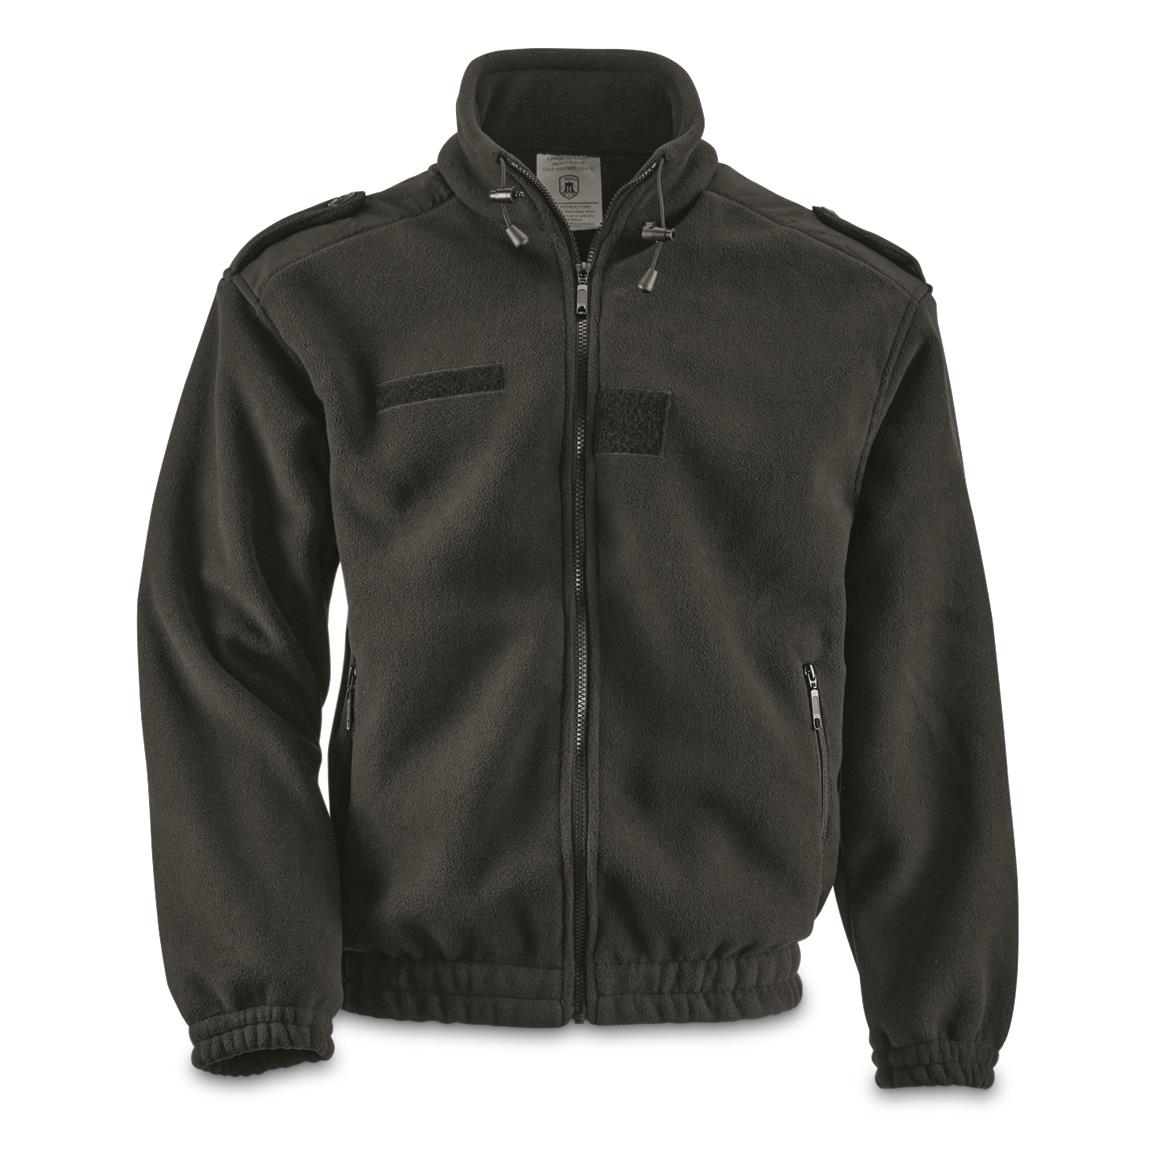 Brooklyn Armed Forces NATO 500 Gram Heavyweight Fleece Jacket, Black